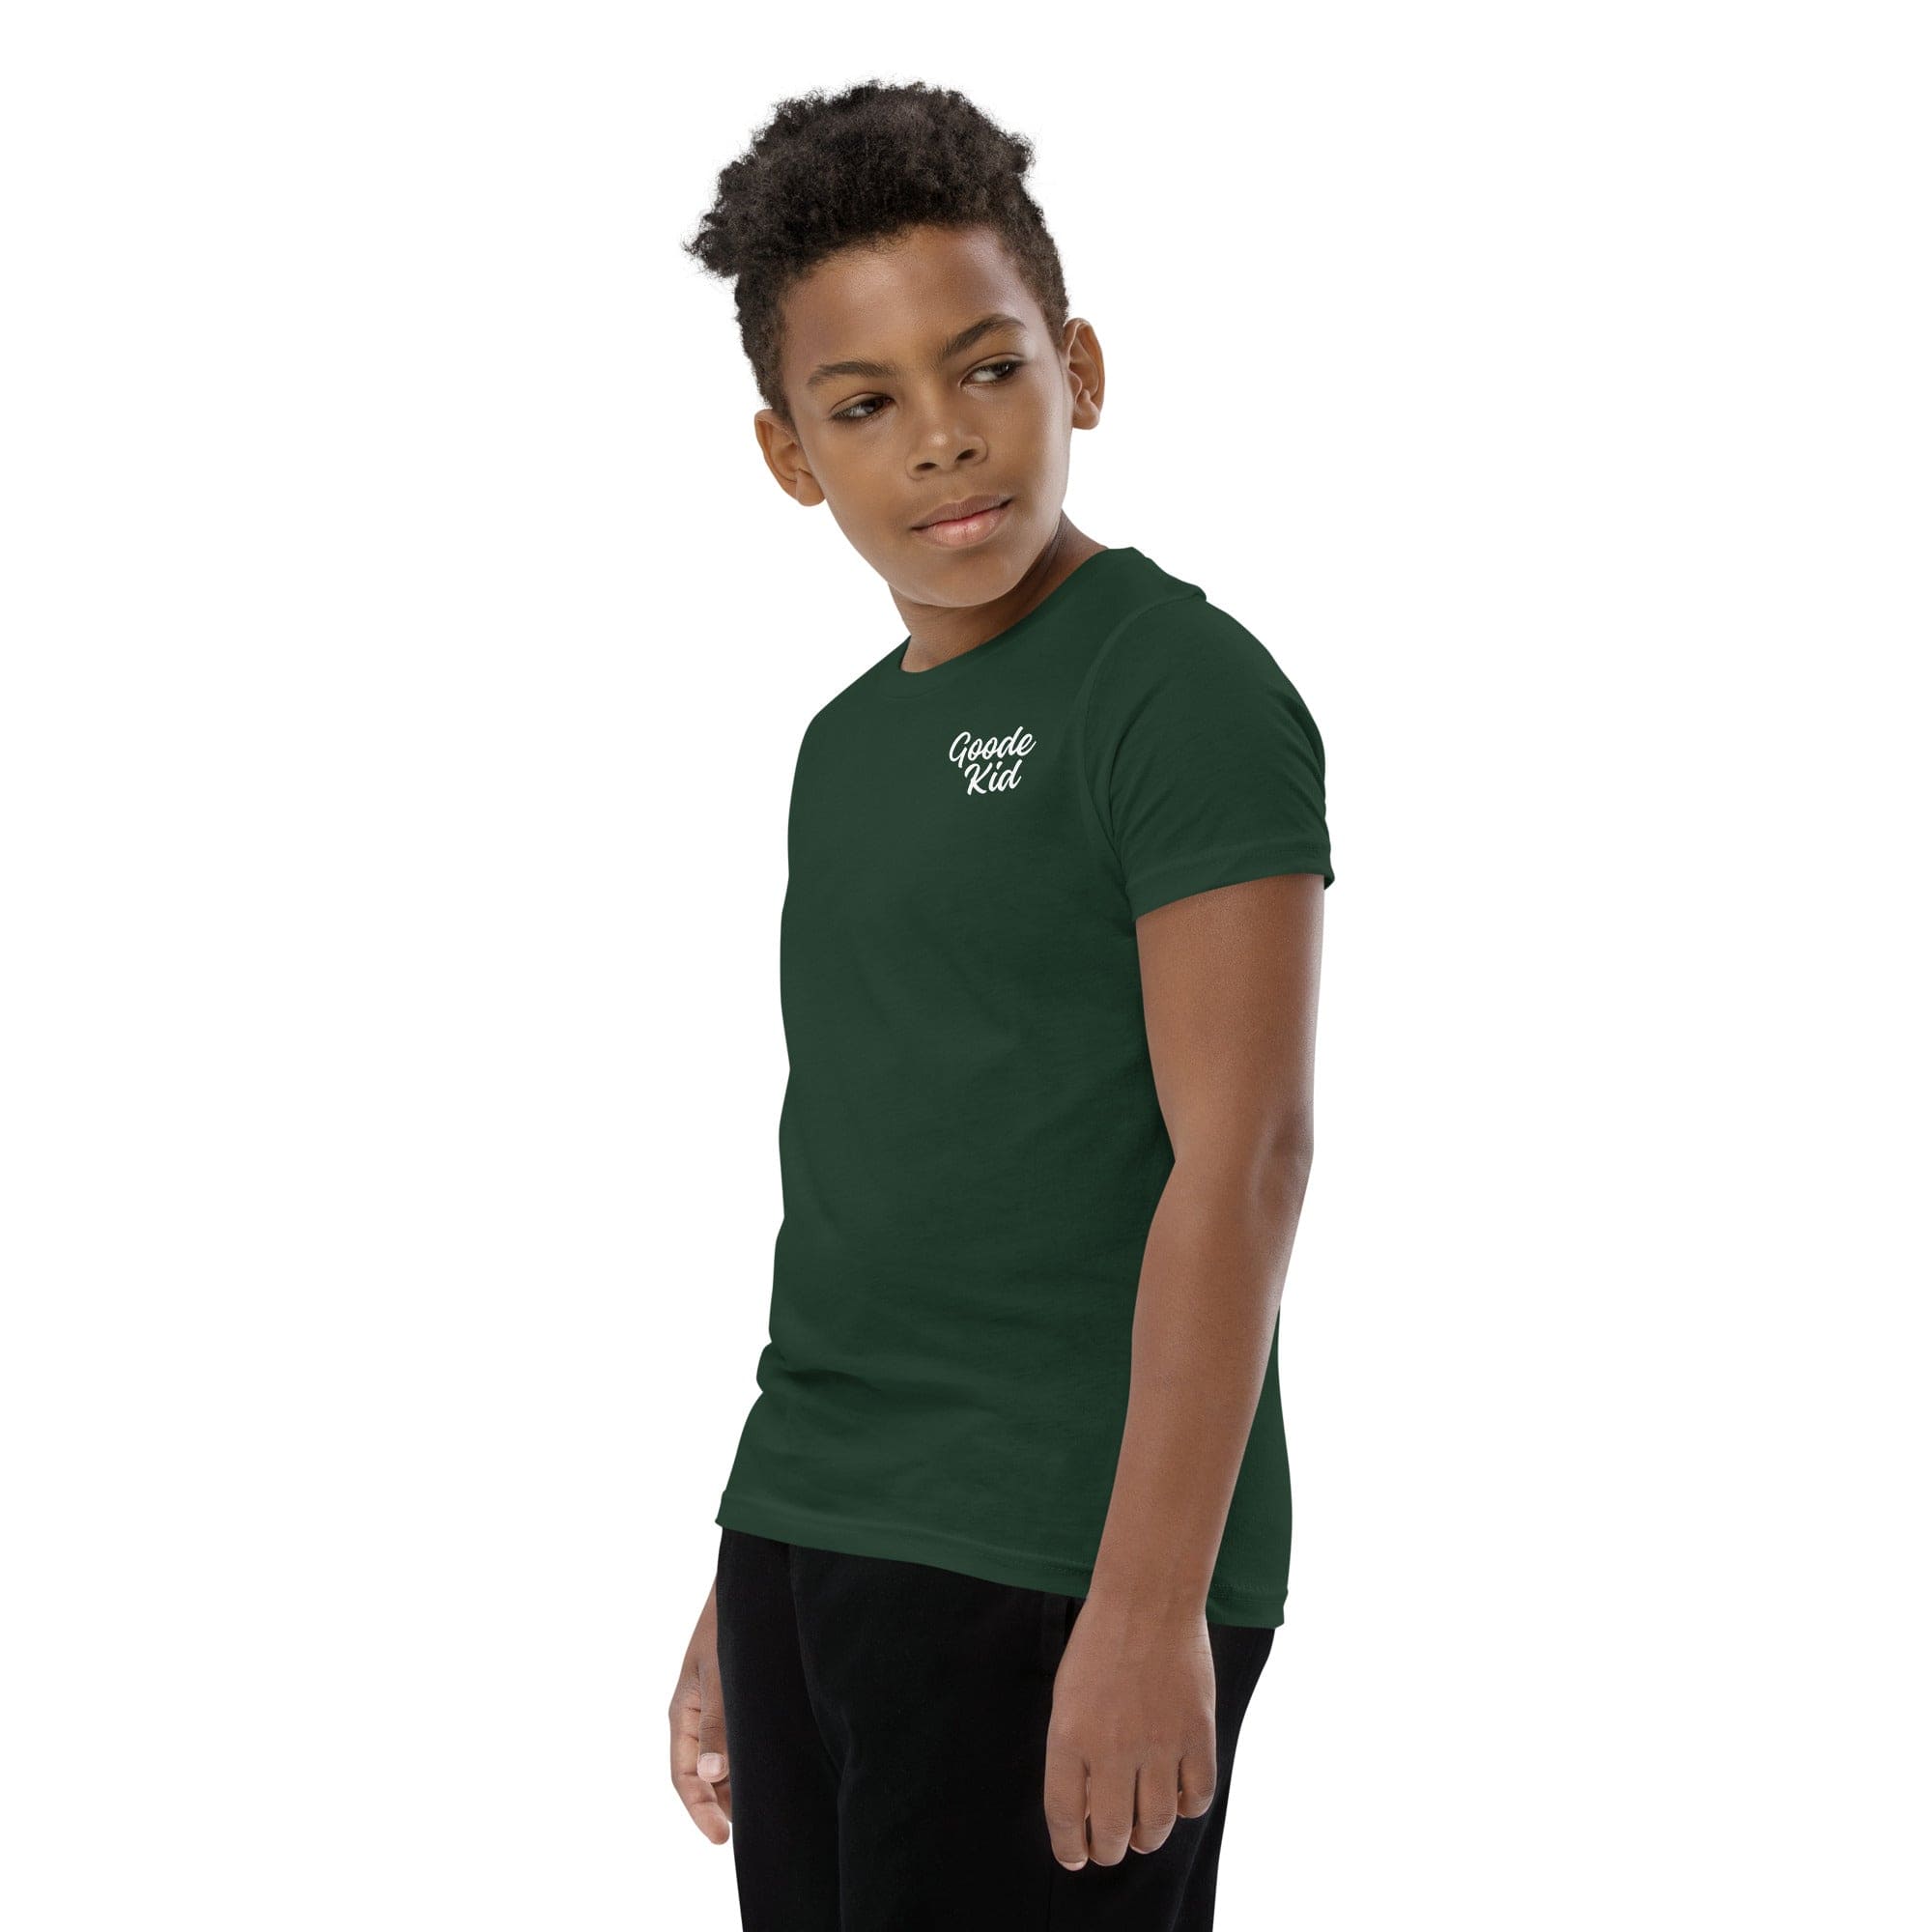 Goode Kid T-shirt | Youth kids t-shirts Jolly & Goode